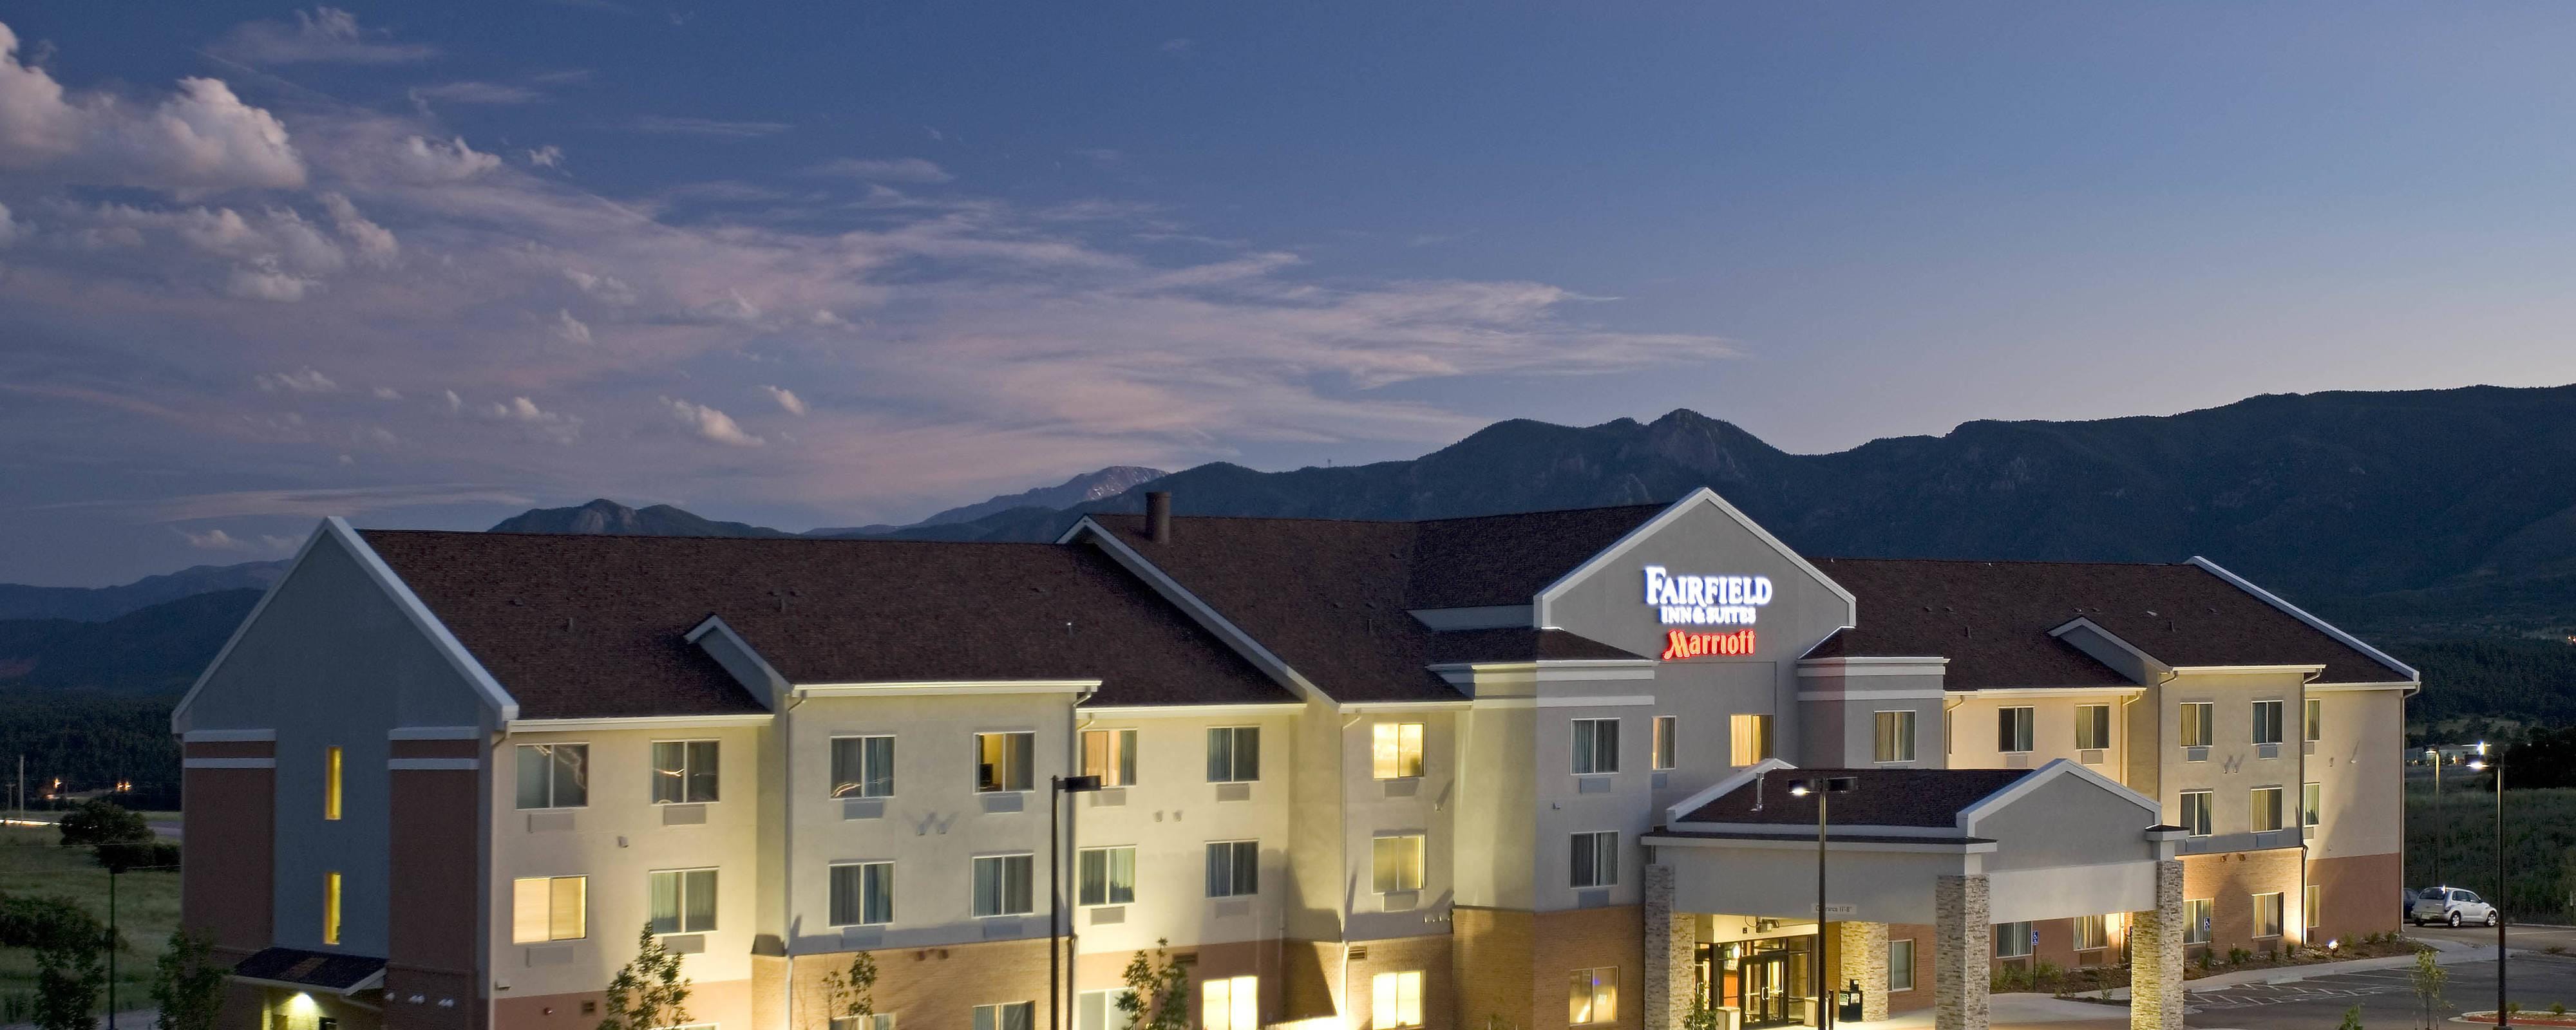 Fairfield Inn Suites Colorado Springs USAFA Hotel Monument